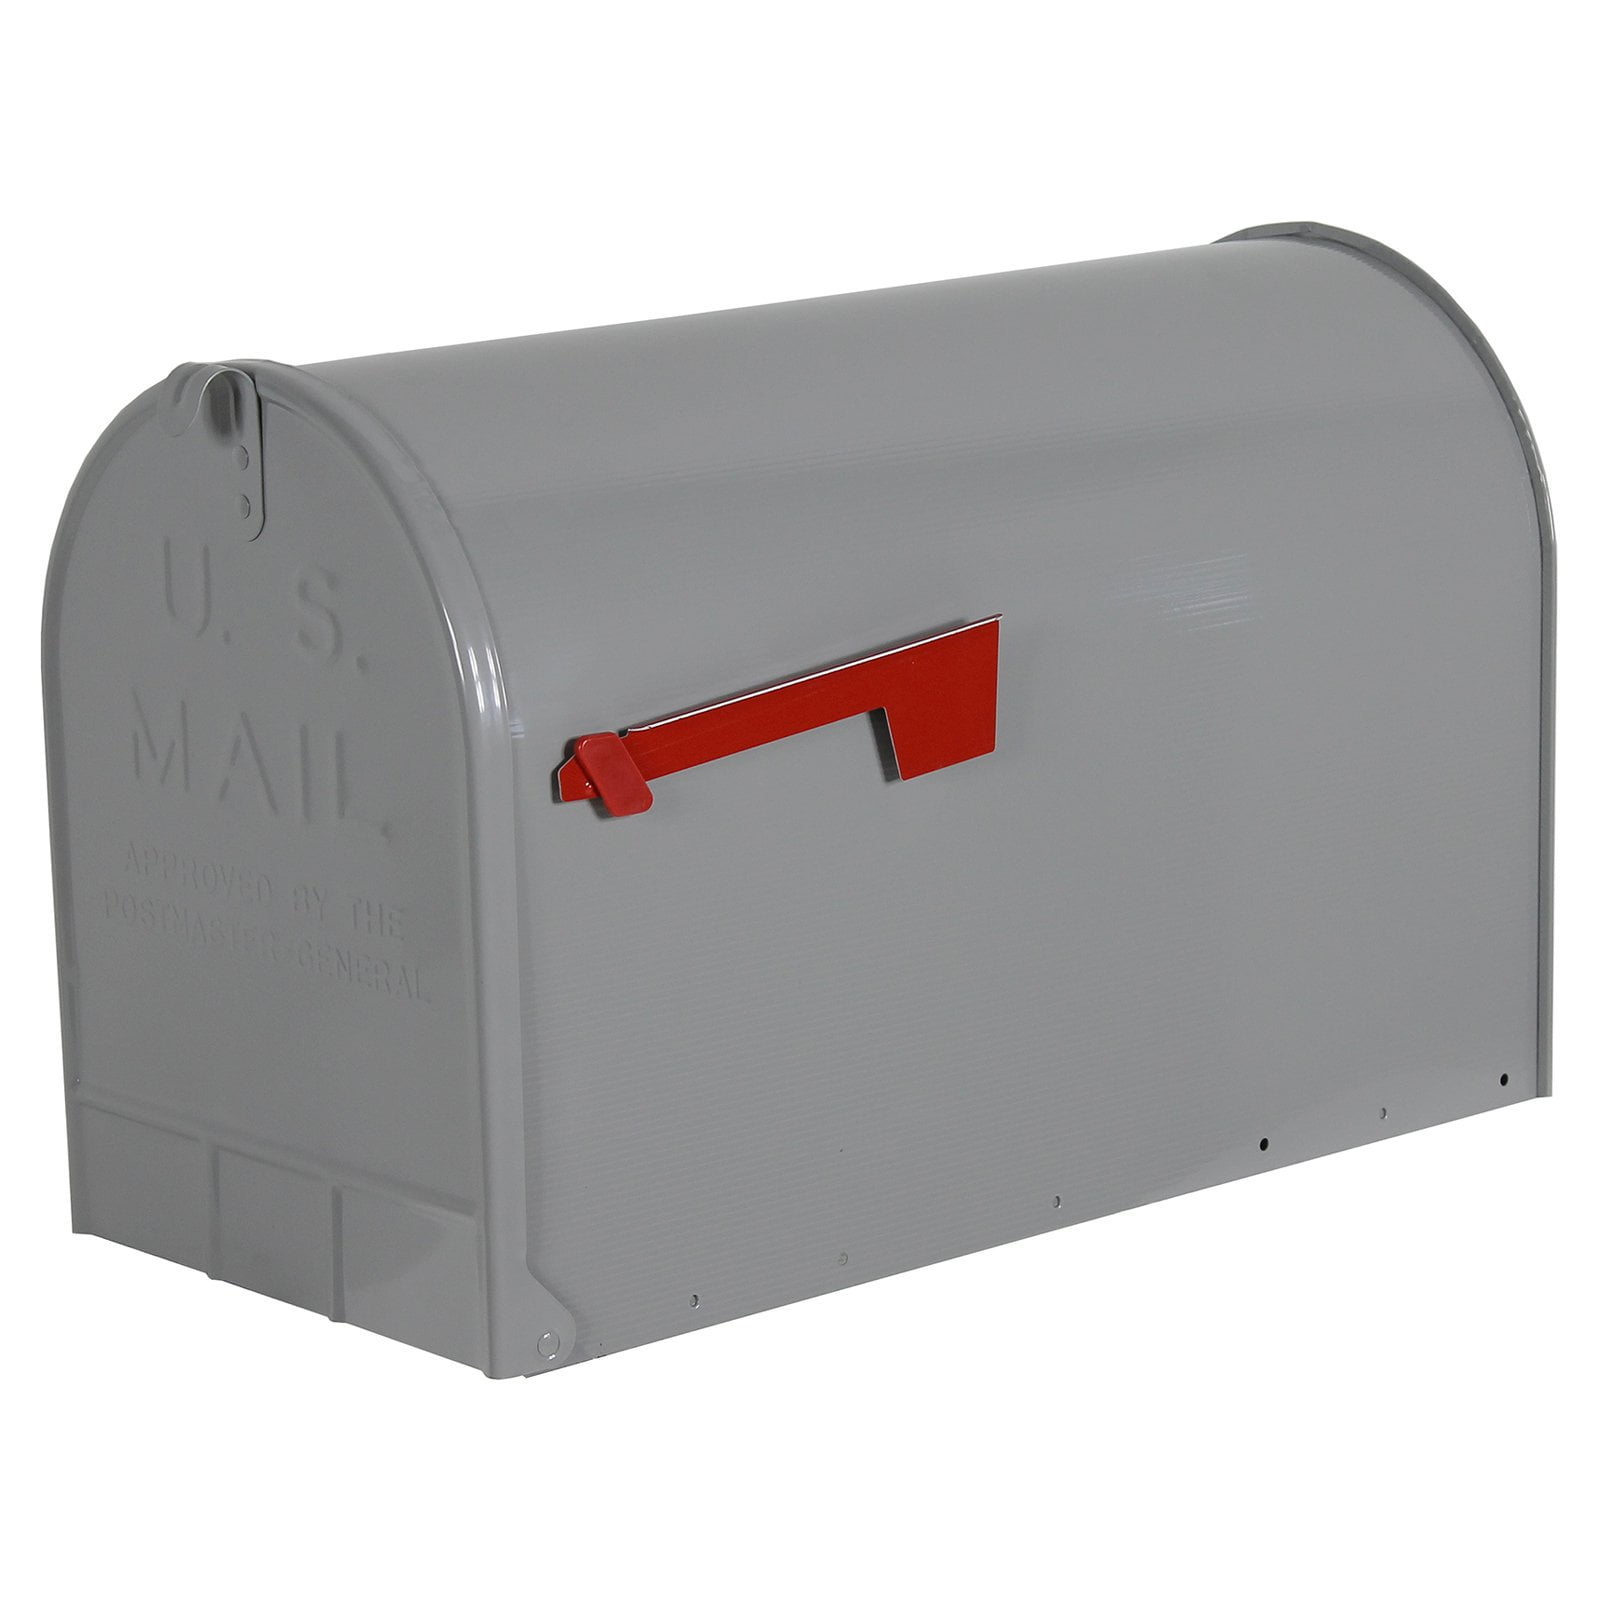 LARGE MAILBOX Galvanized Steel Postal Storage Black Post Mount Street Mail Box 